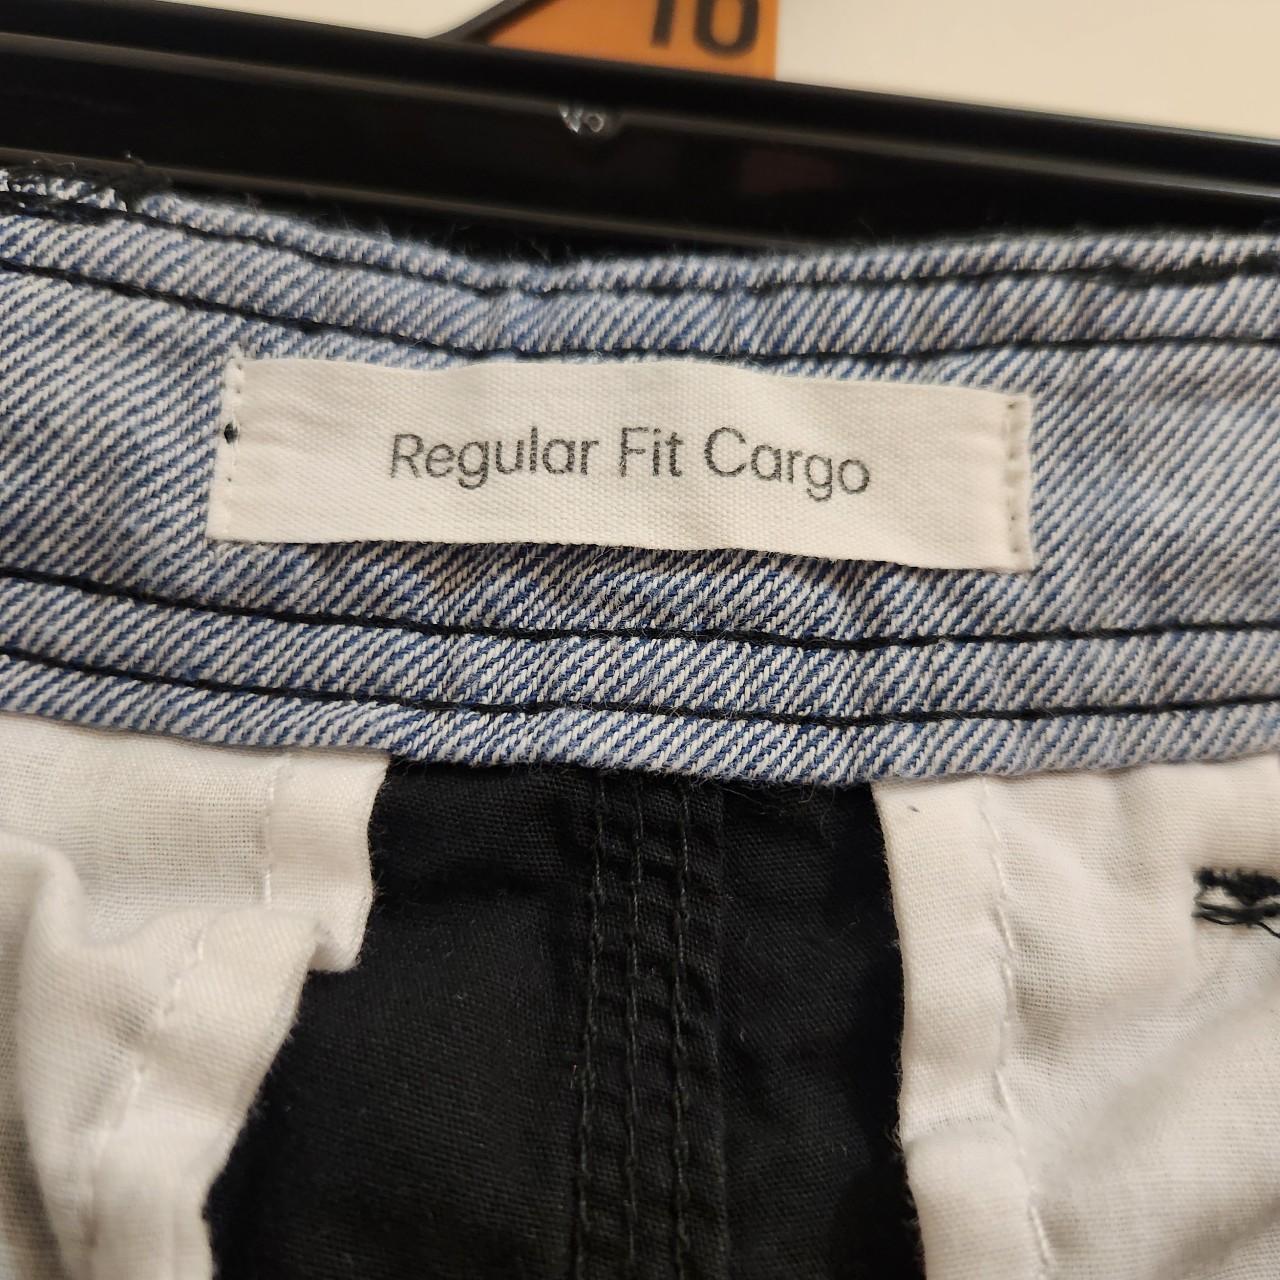 Cargo Pants Kmart Nz